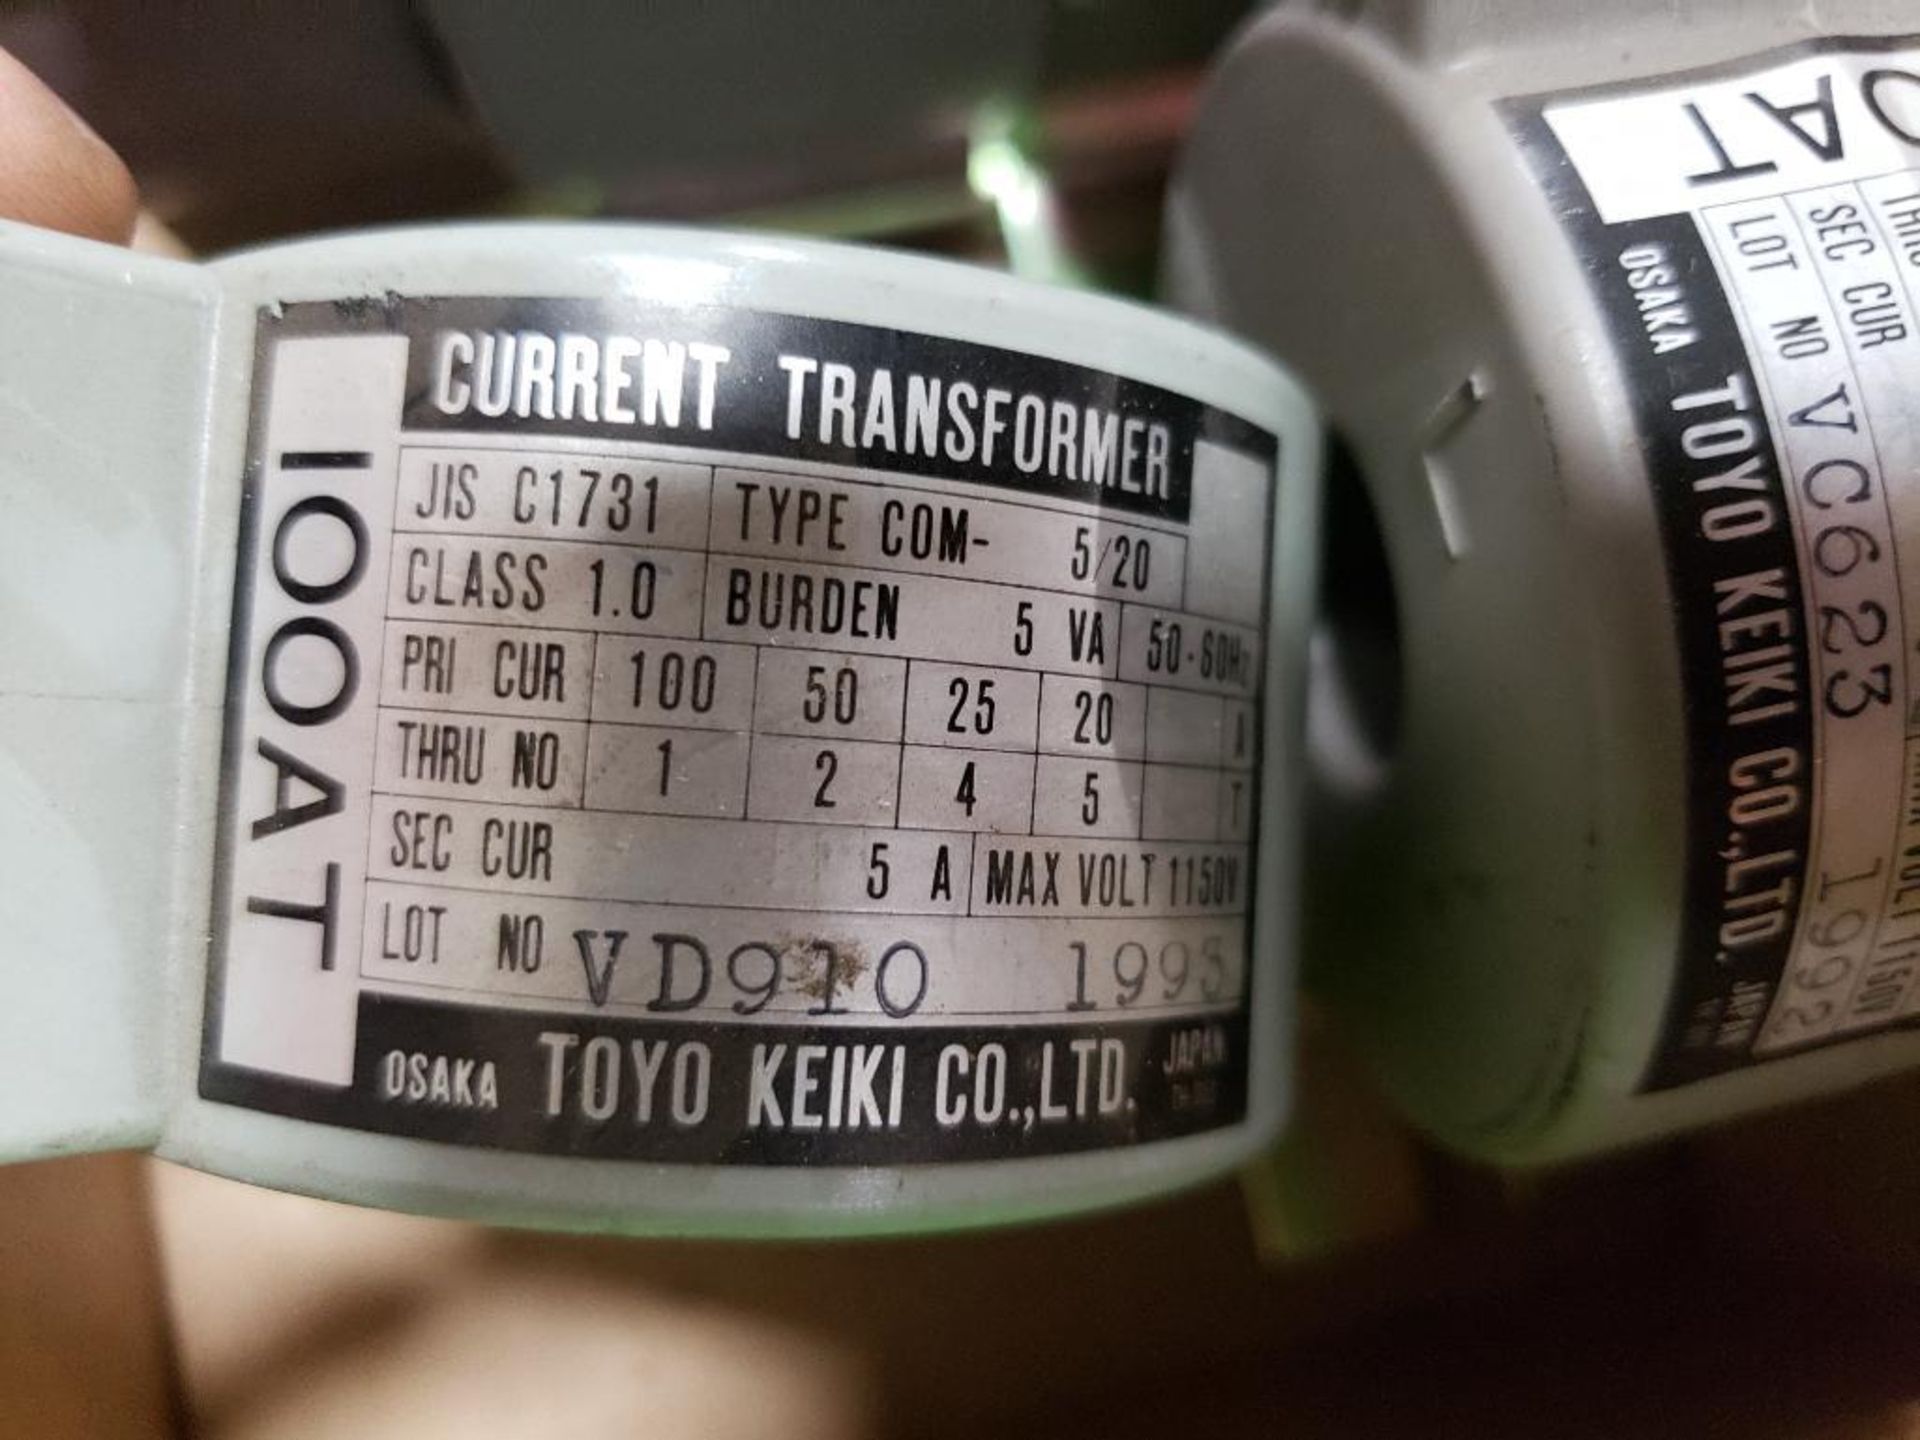 Qty 8 - NEW Toyo Keiki 100AT JIS C1731 Current Transformer USIP. - Image 4 of 6